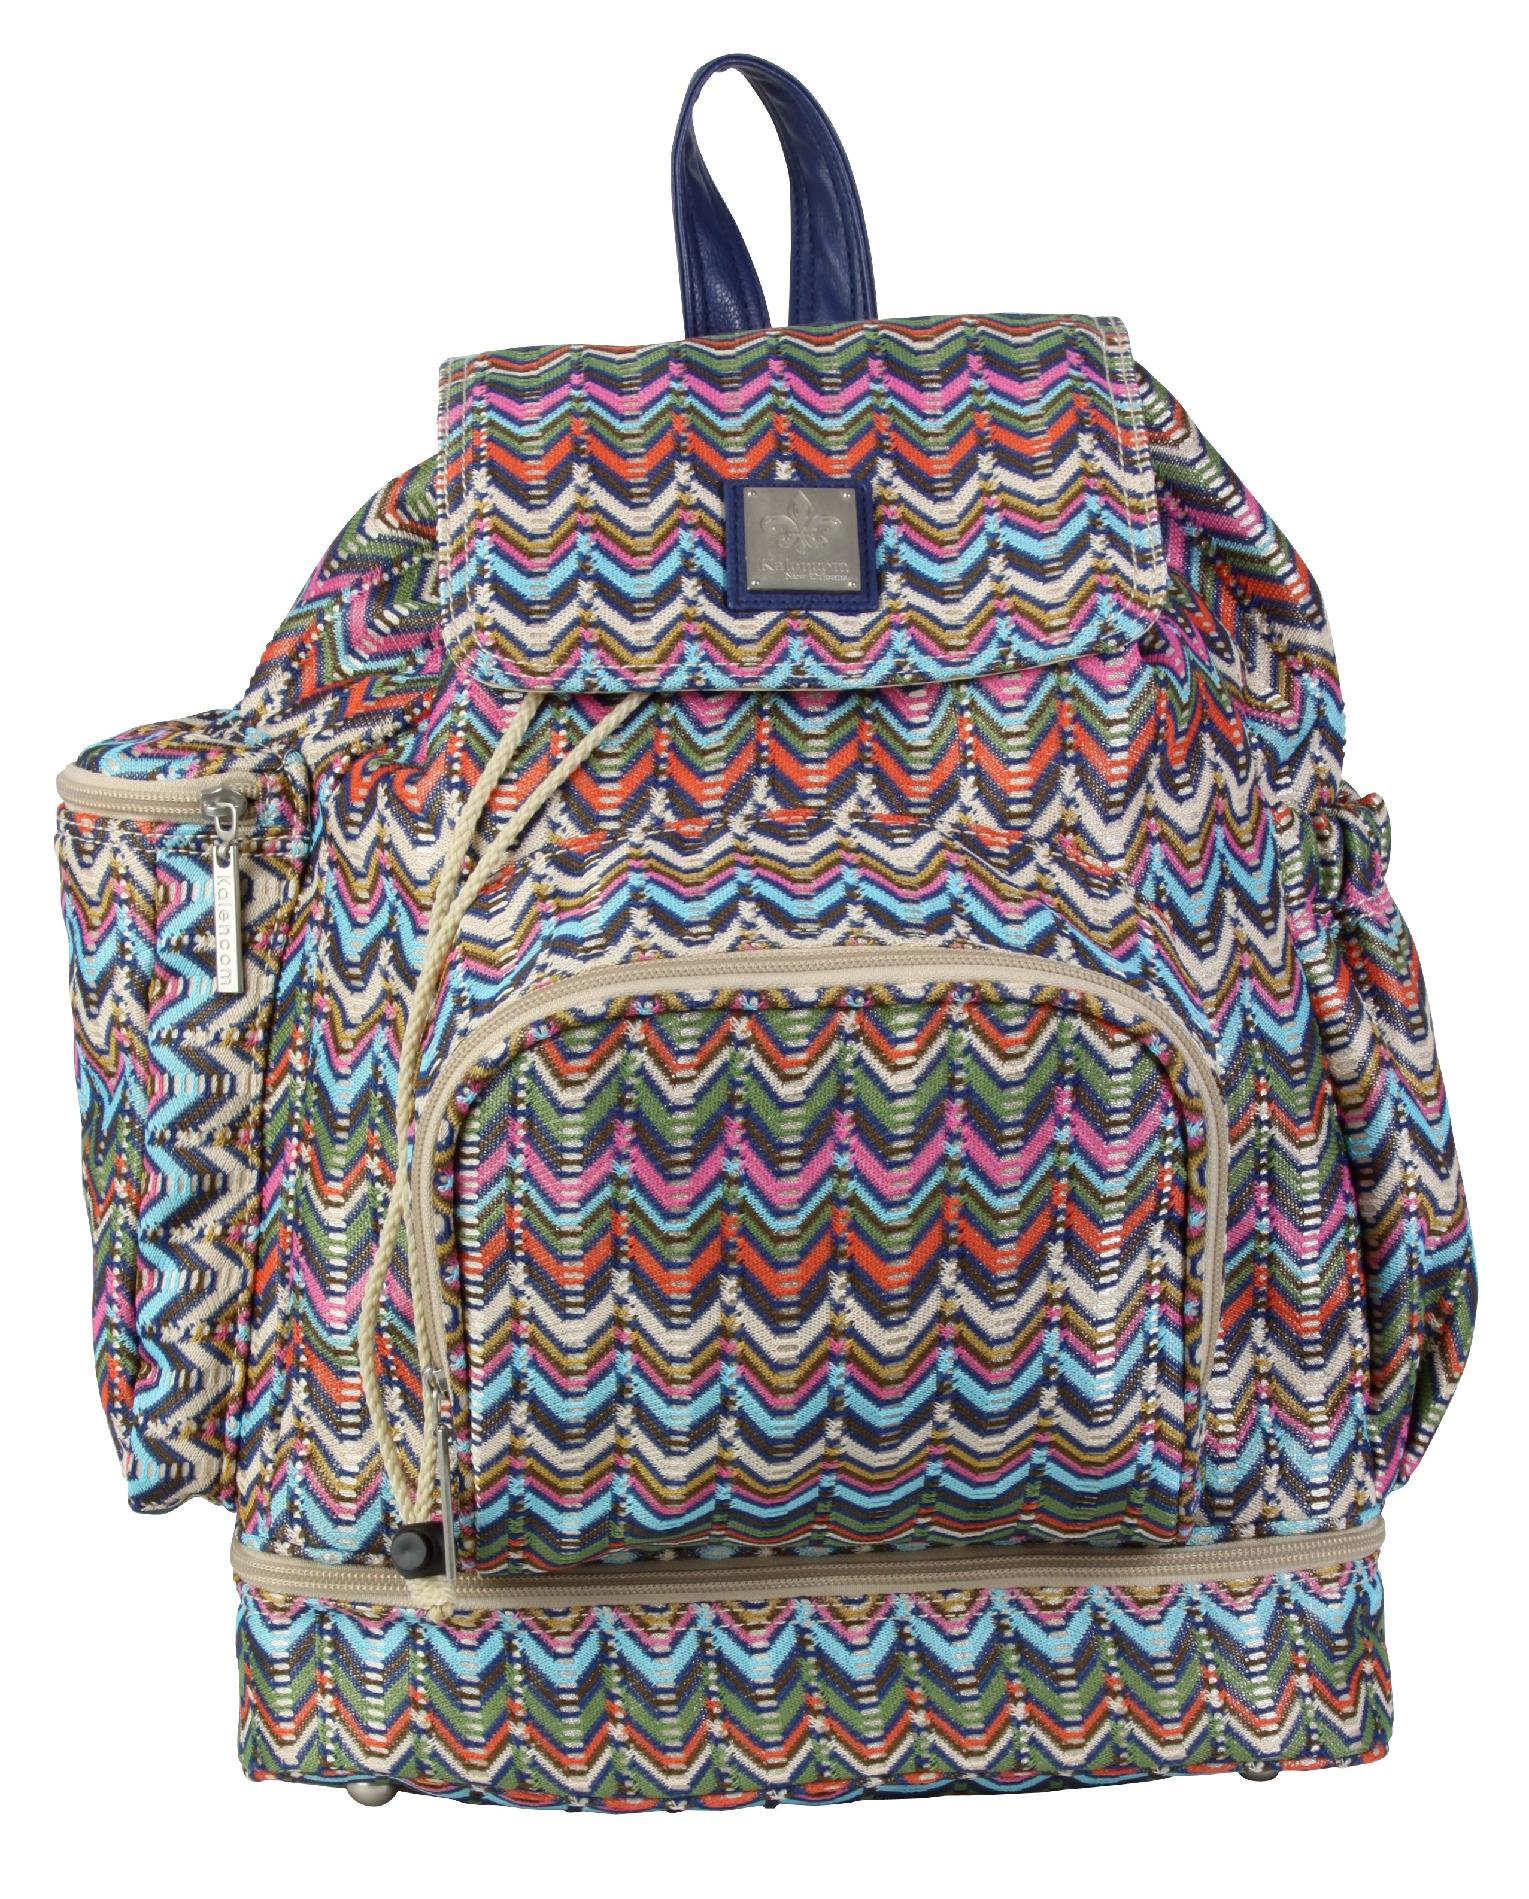 Kalencom Backpack Diaper Bag